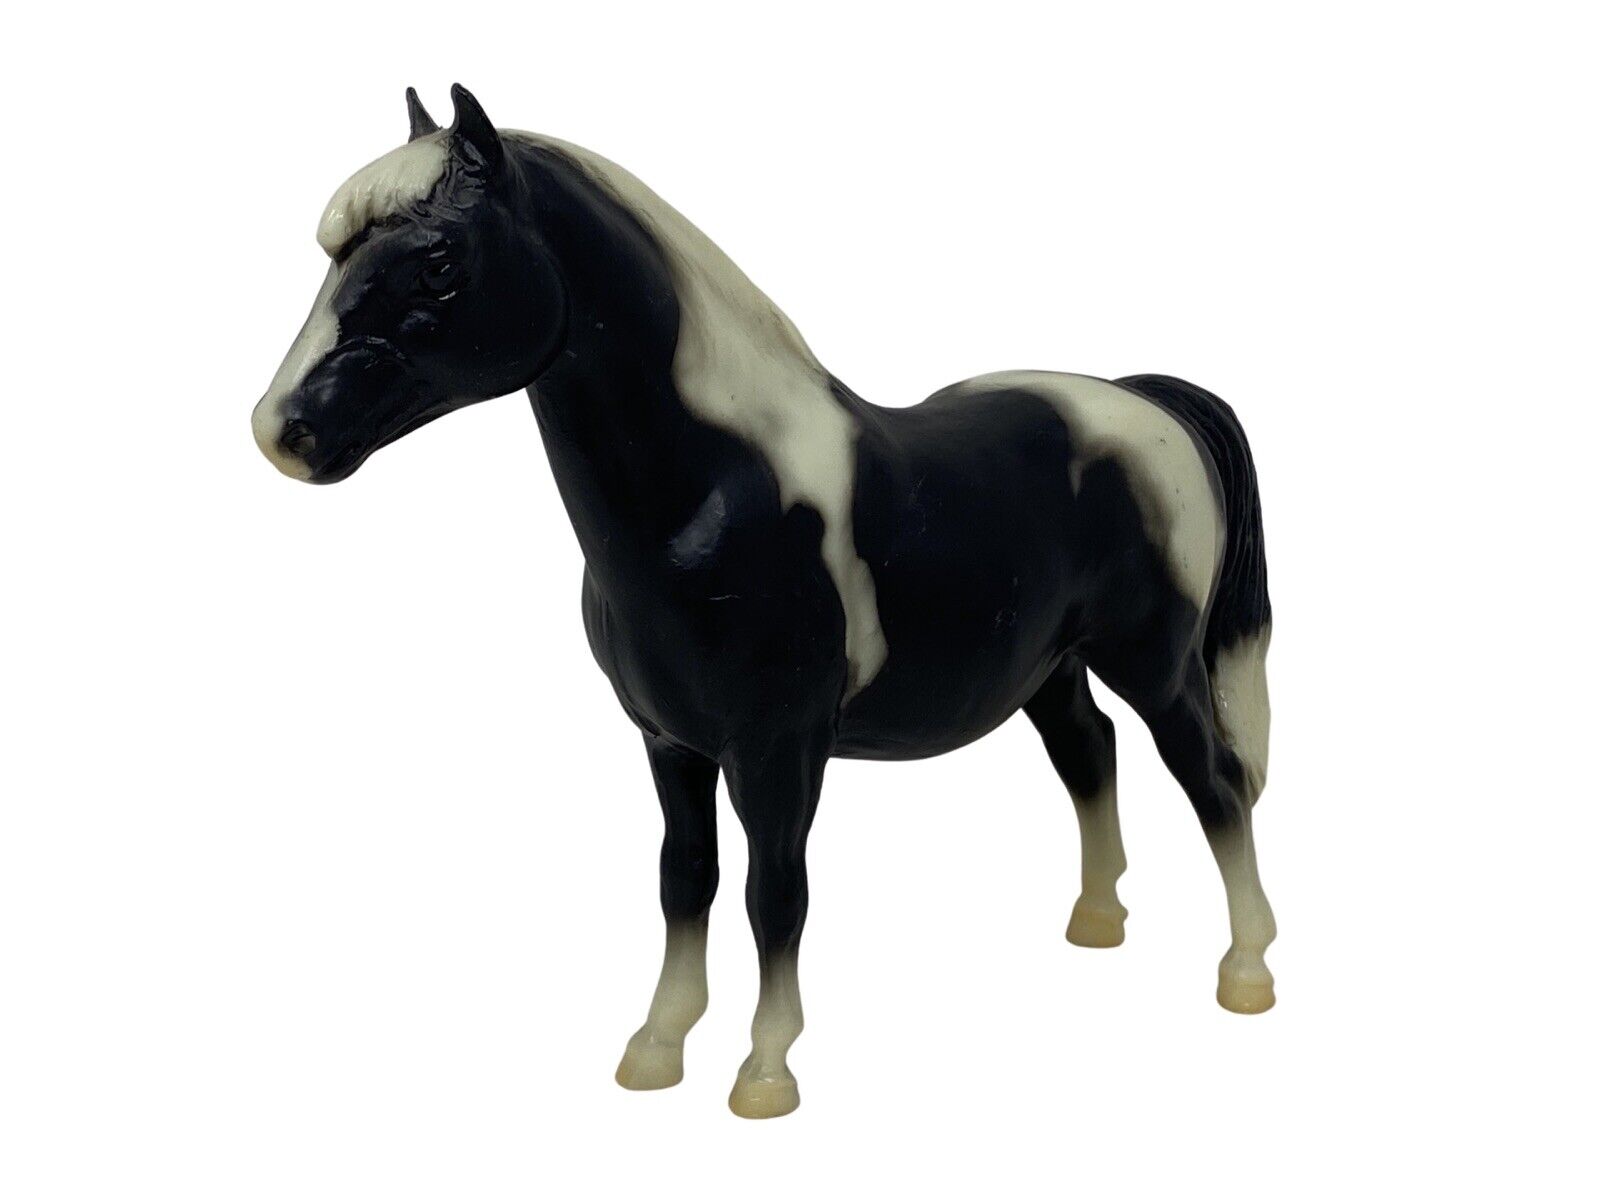 Breyer horse Midge black and white pinto shetland pony 